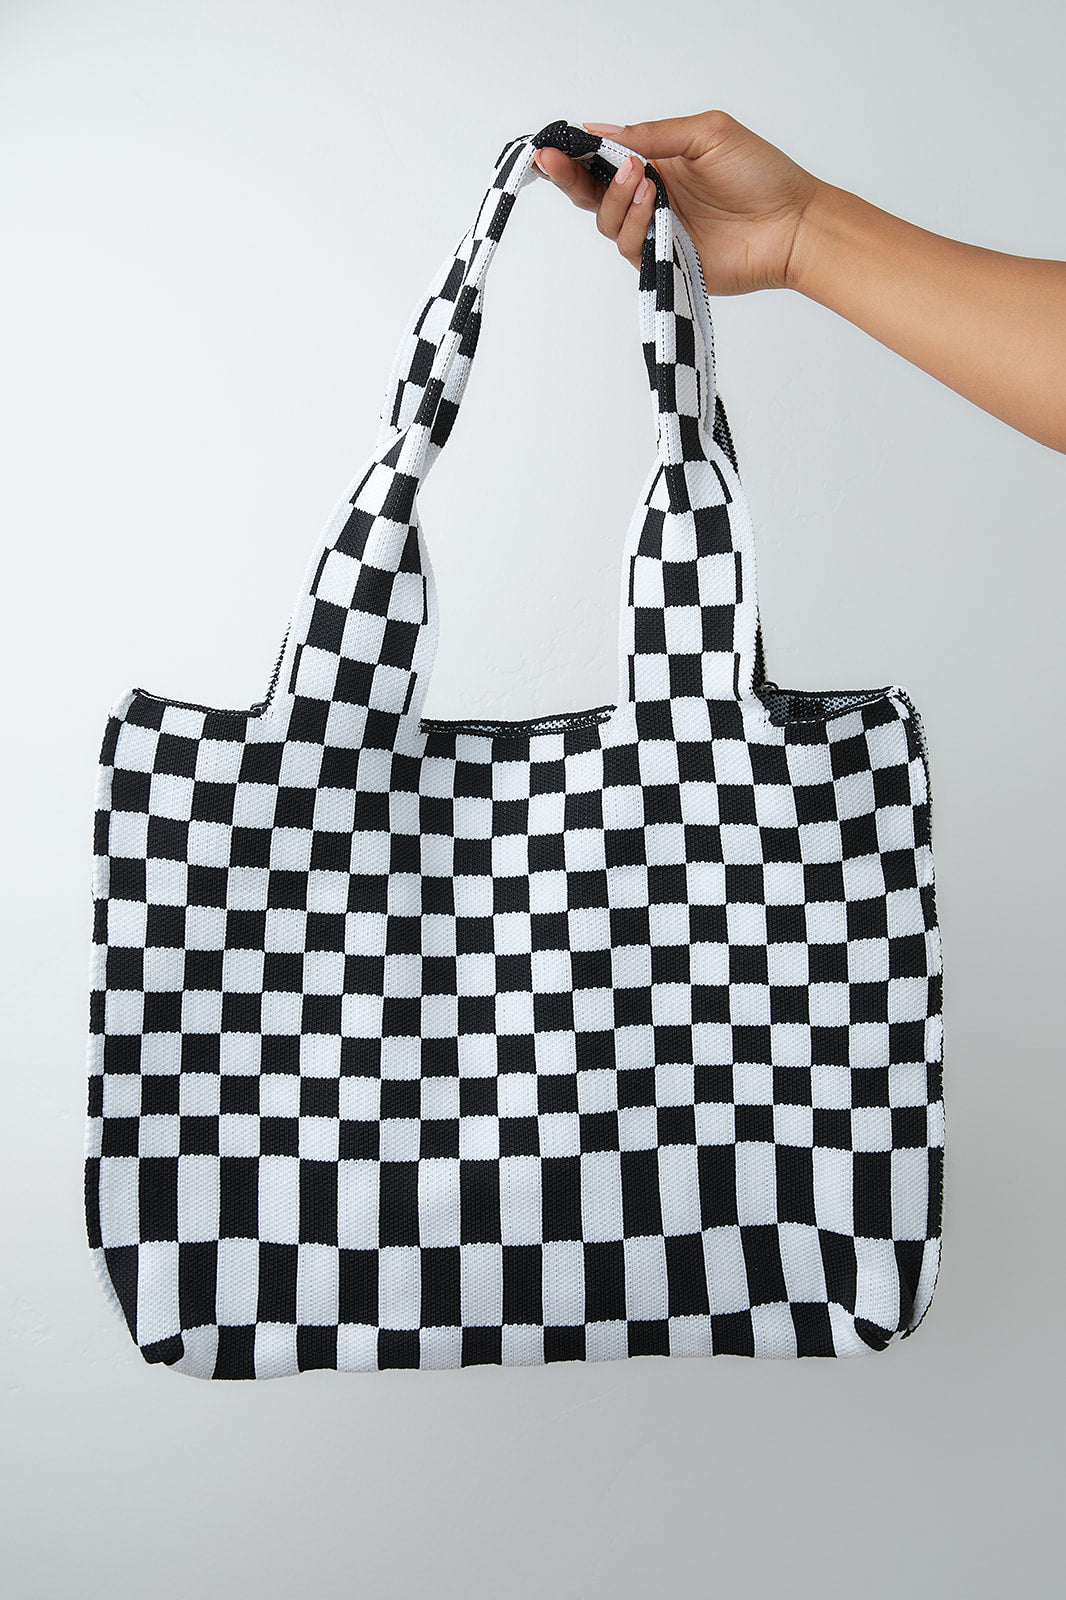 Off-White Logo Checkered Bag Black/White Purse